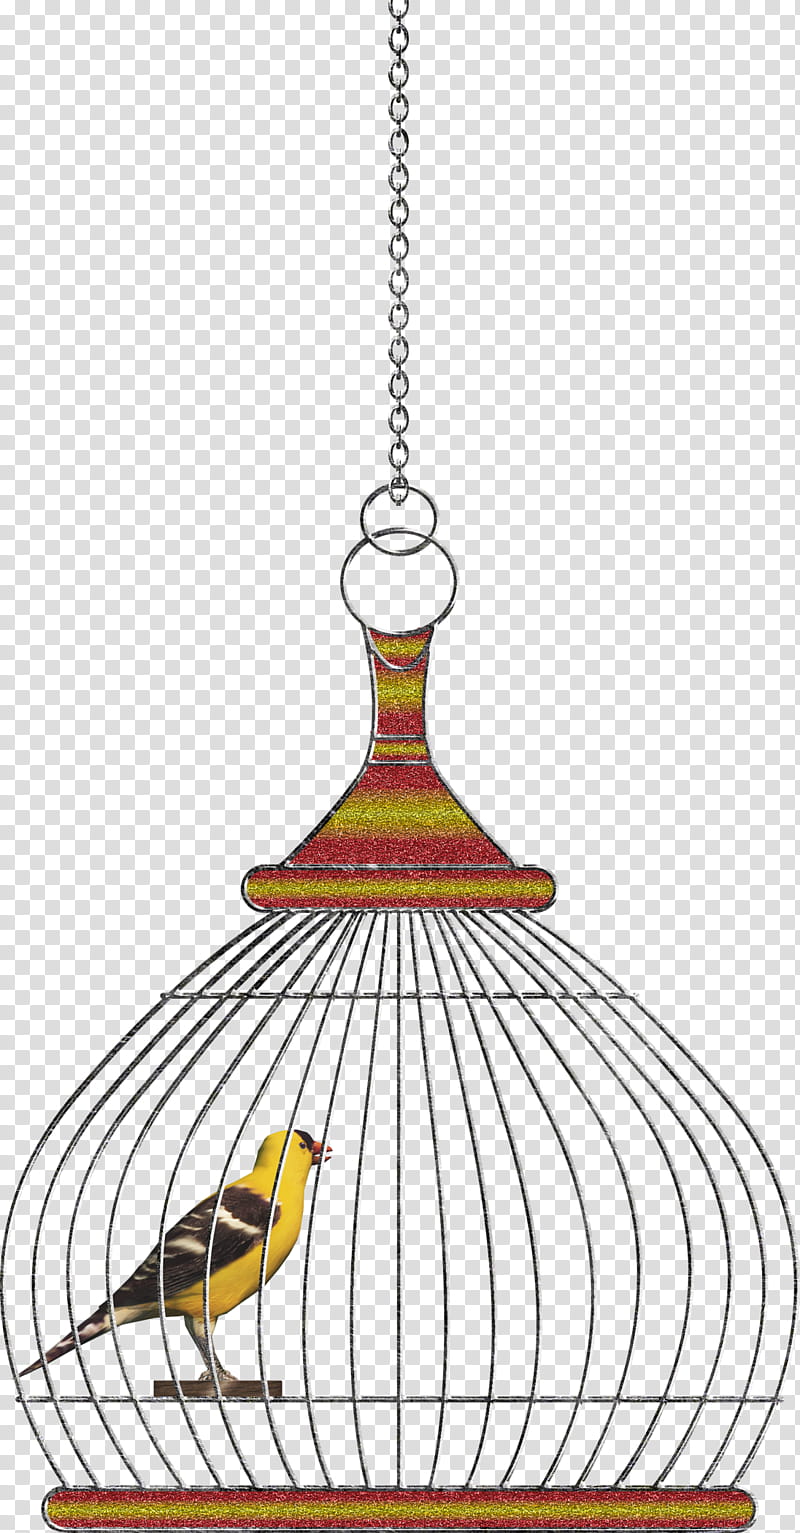 bird in hanging birdcage illustration transparent background PNG clipart